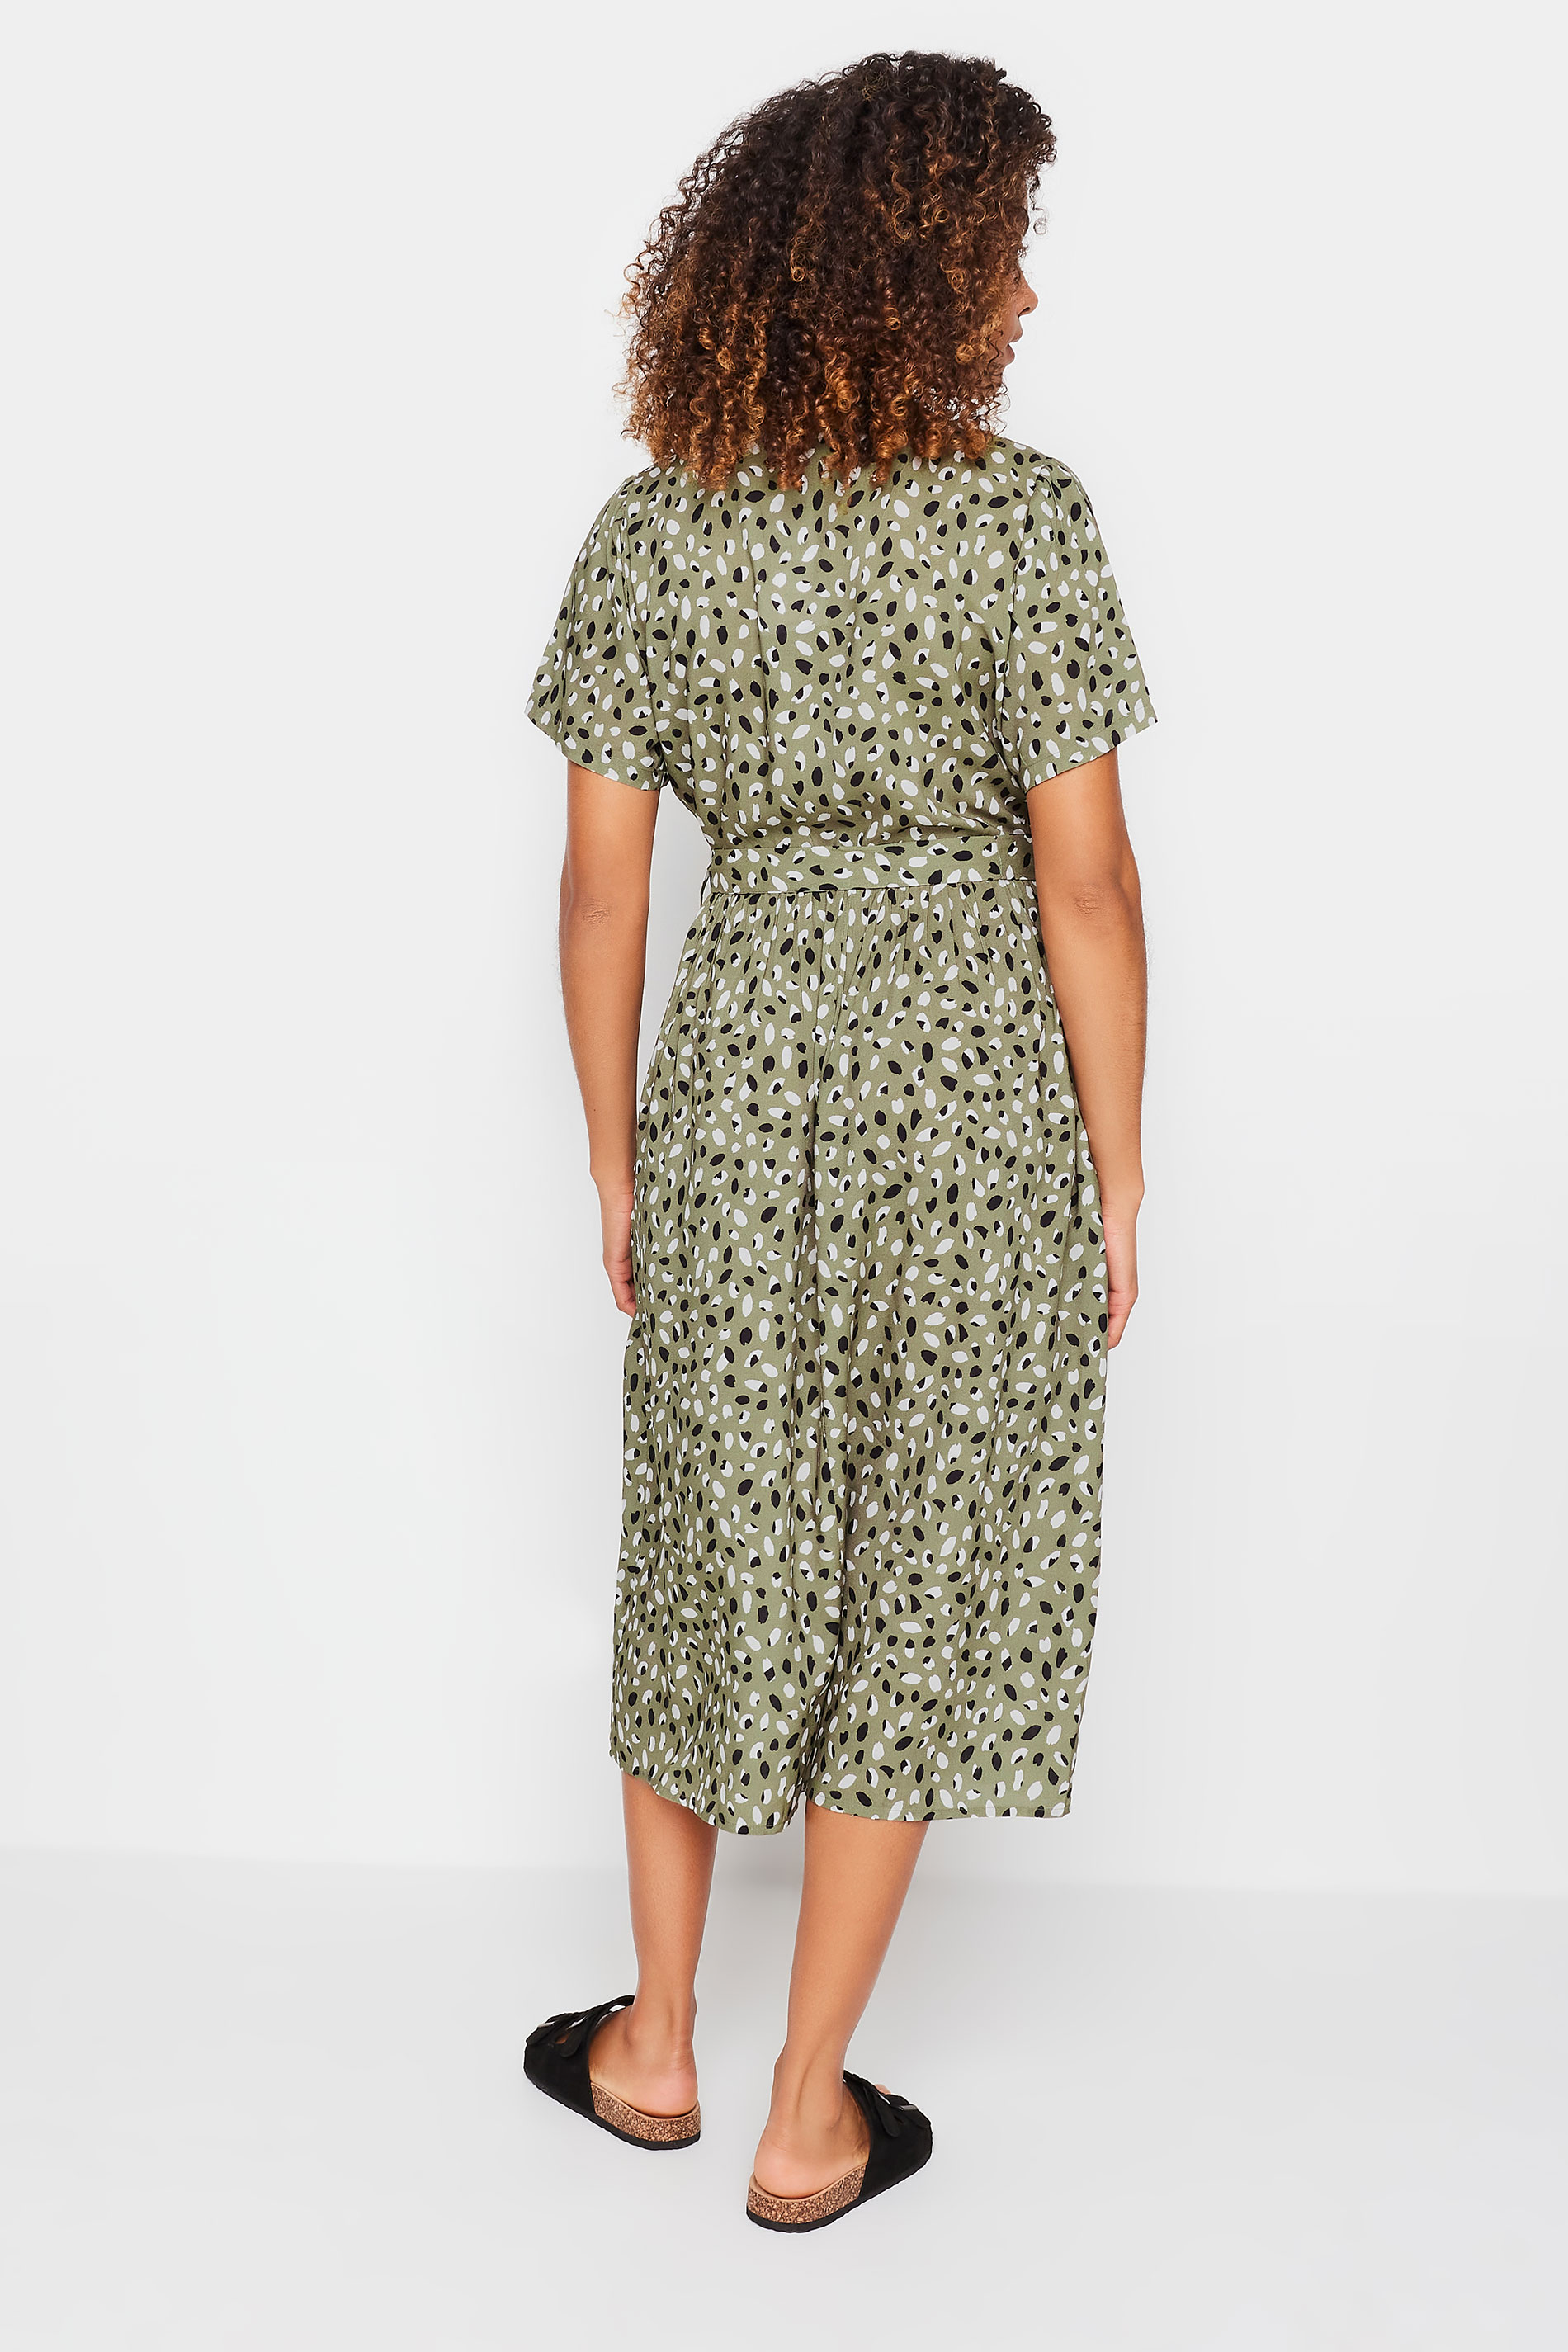 M&Co Khaki Green Spot Print Half Placket Dress | M&Co 3